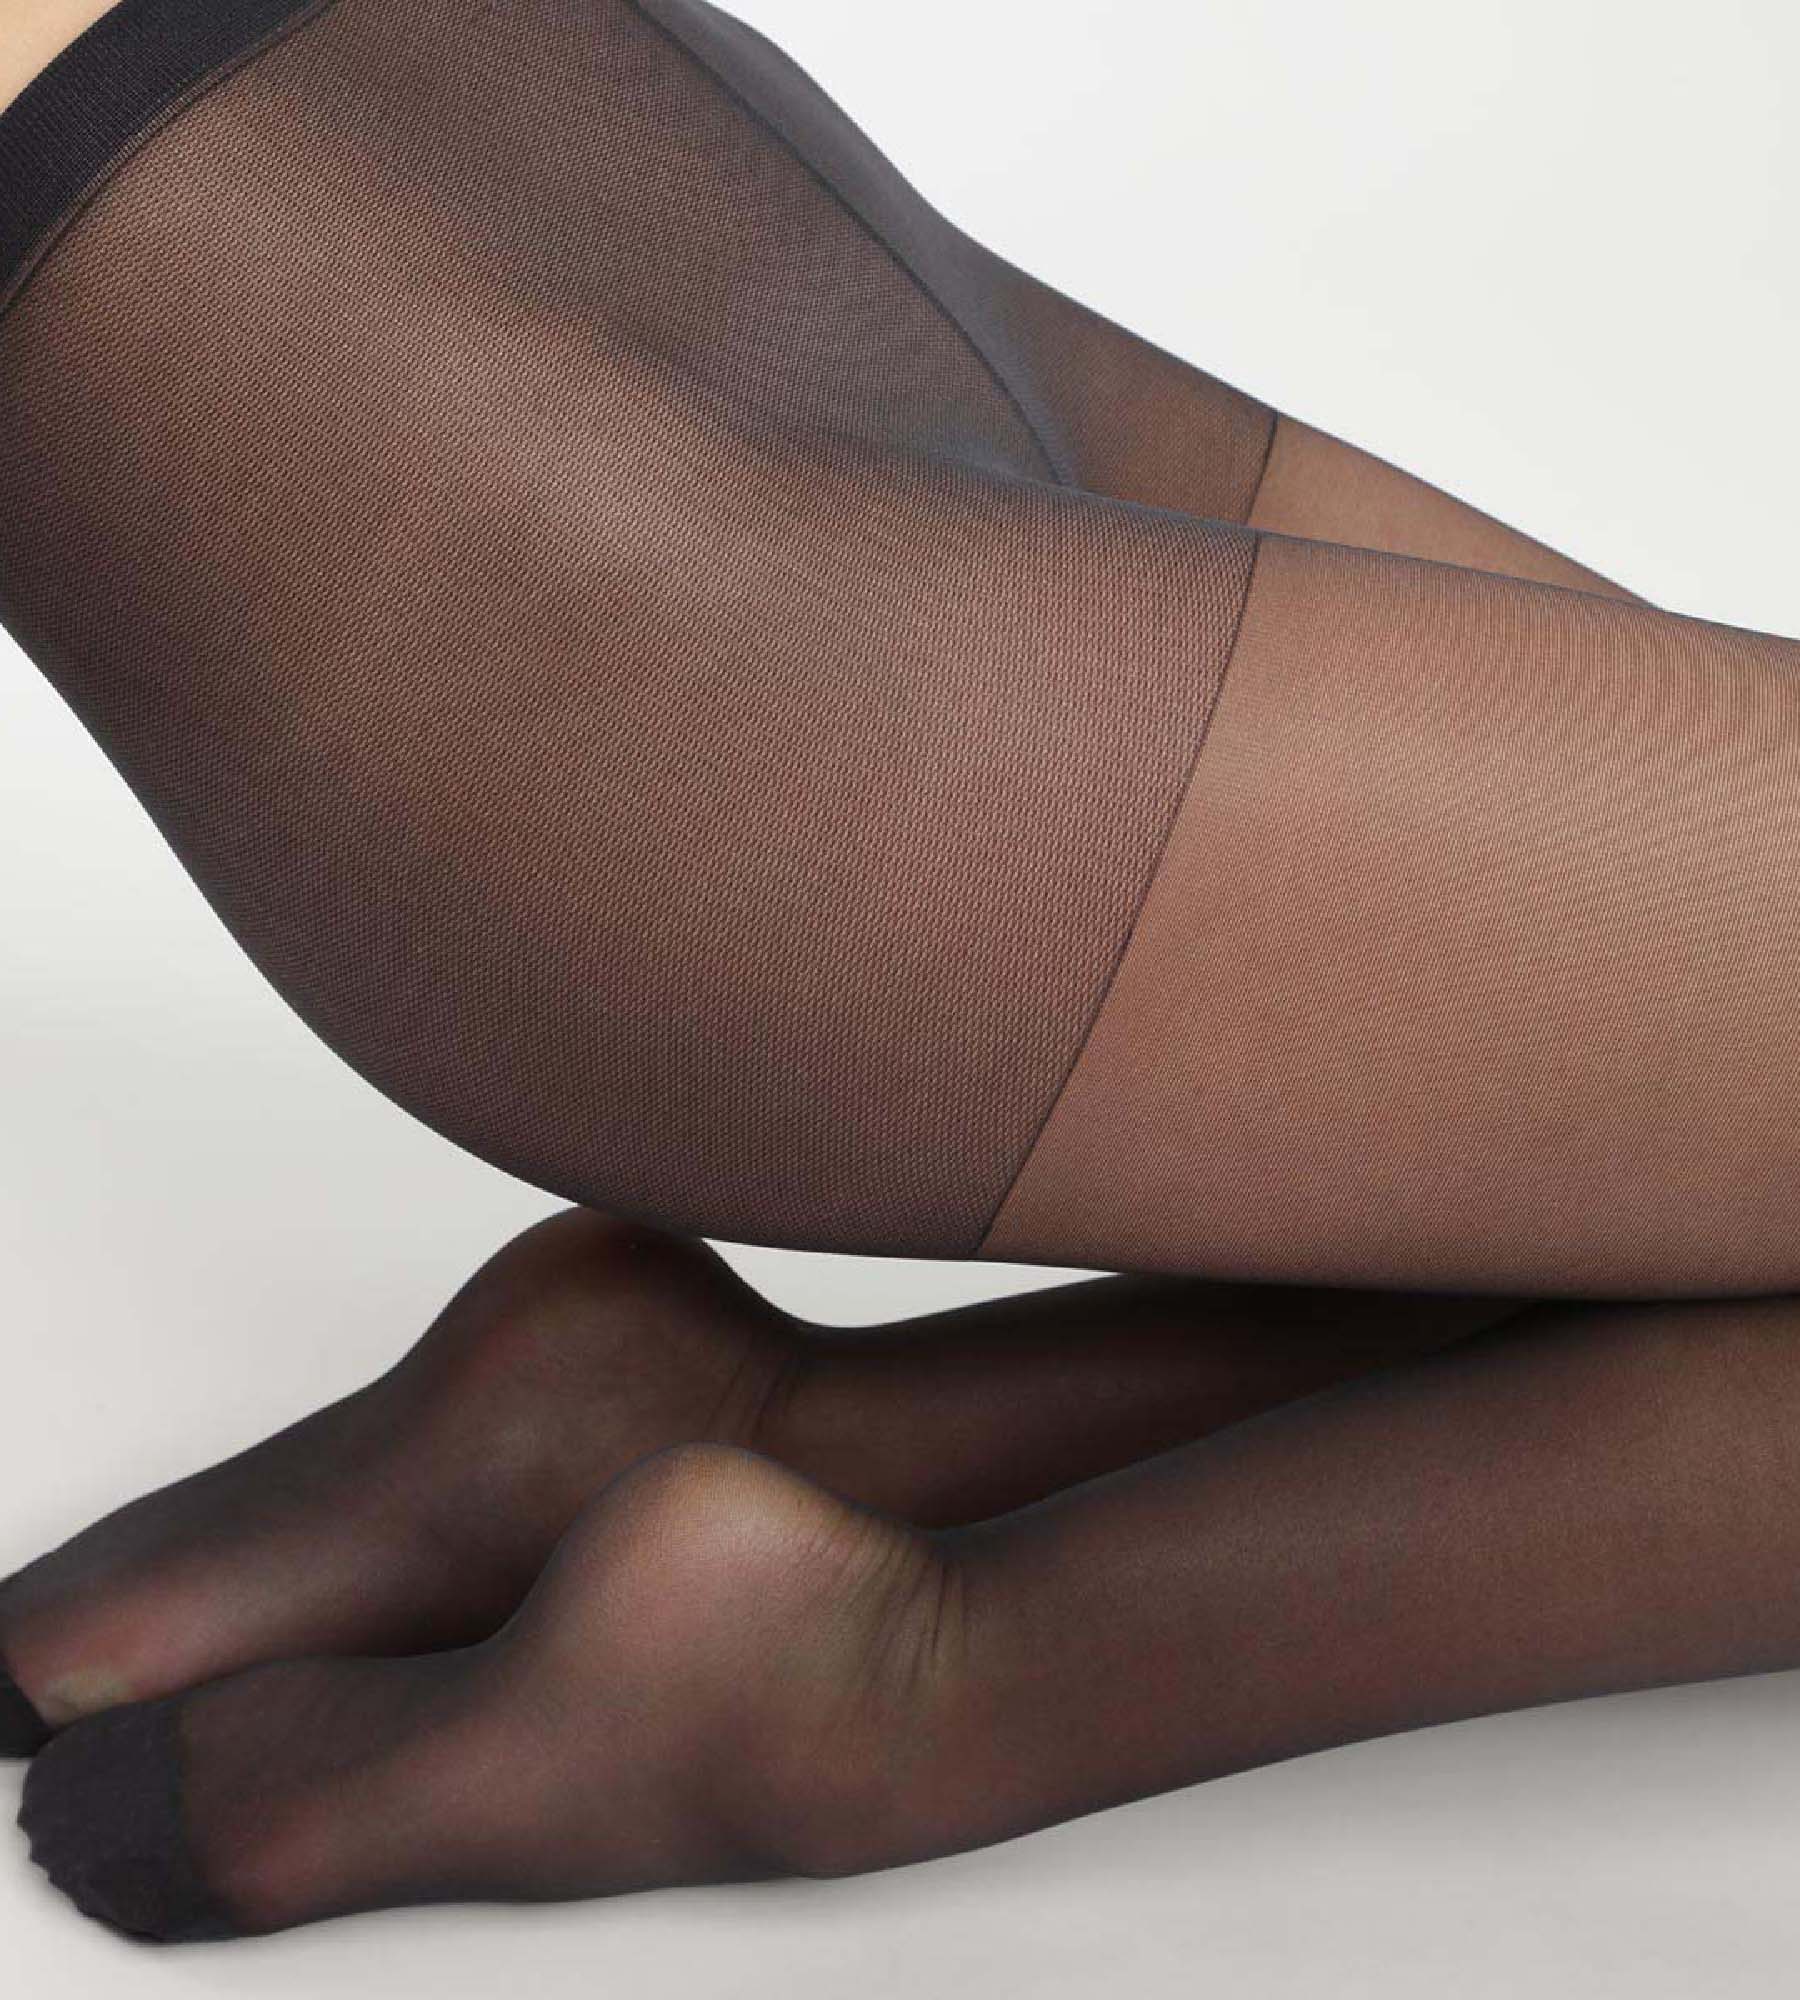 Women's Black Ultra Resist sheer tights made of reinforced Lycra